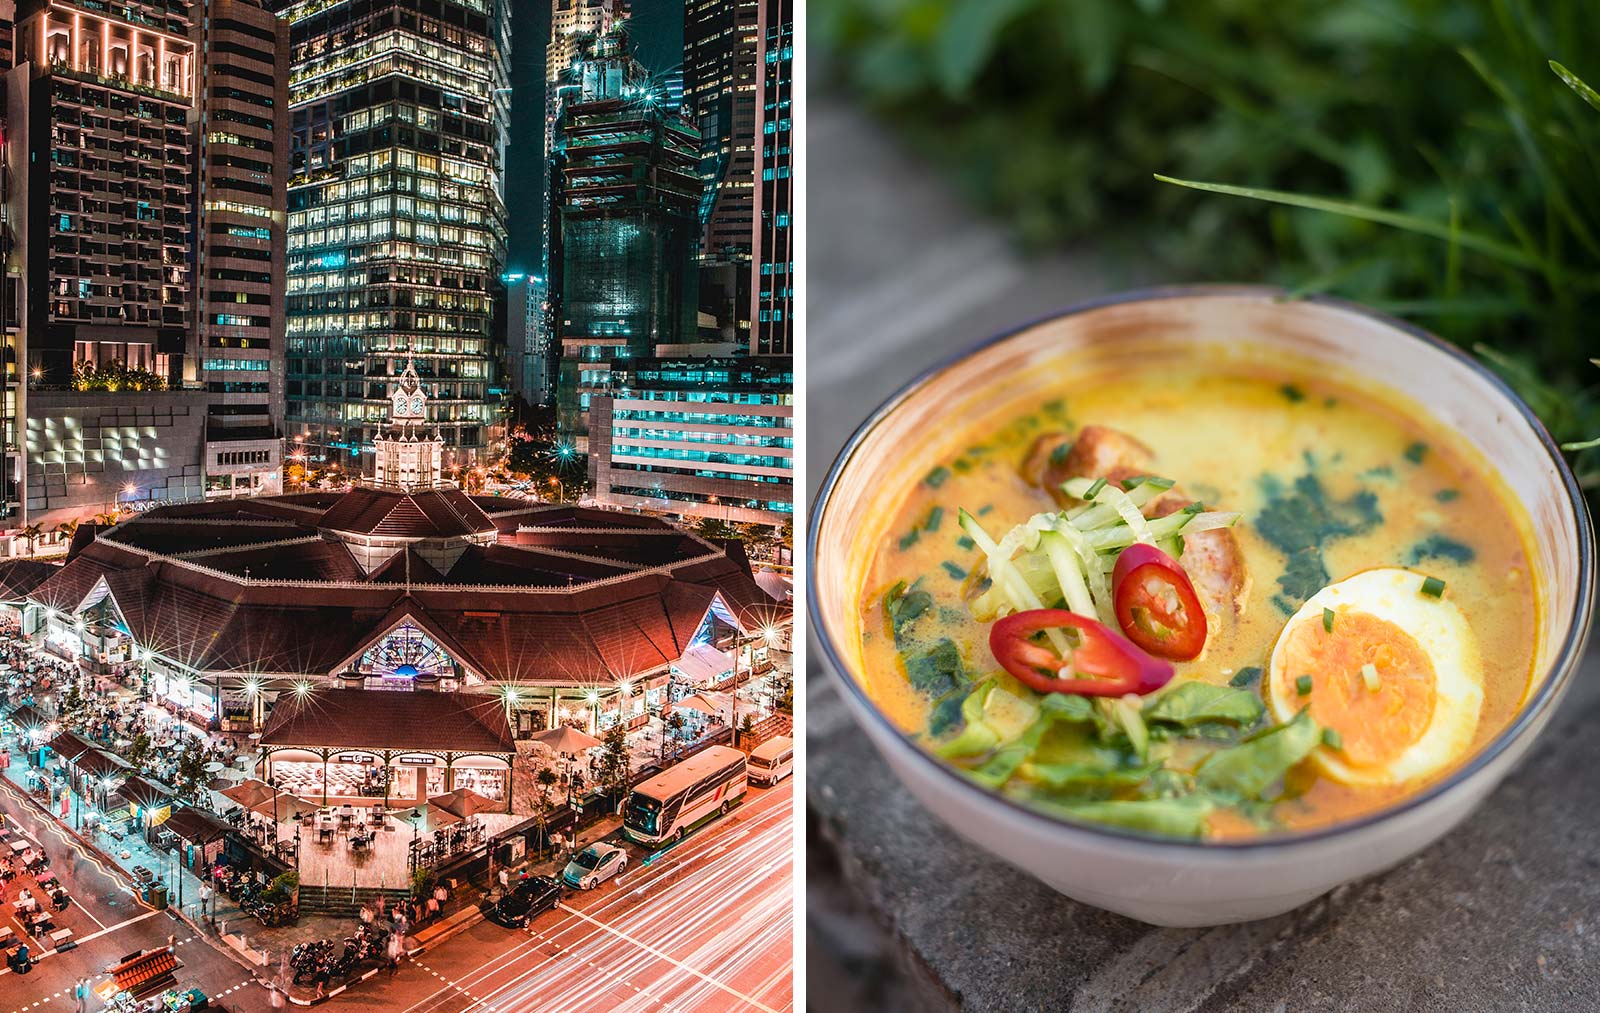 Singapore Telok Ayer Market and bowl of laksa soup